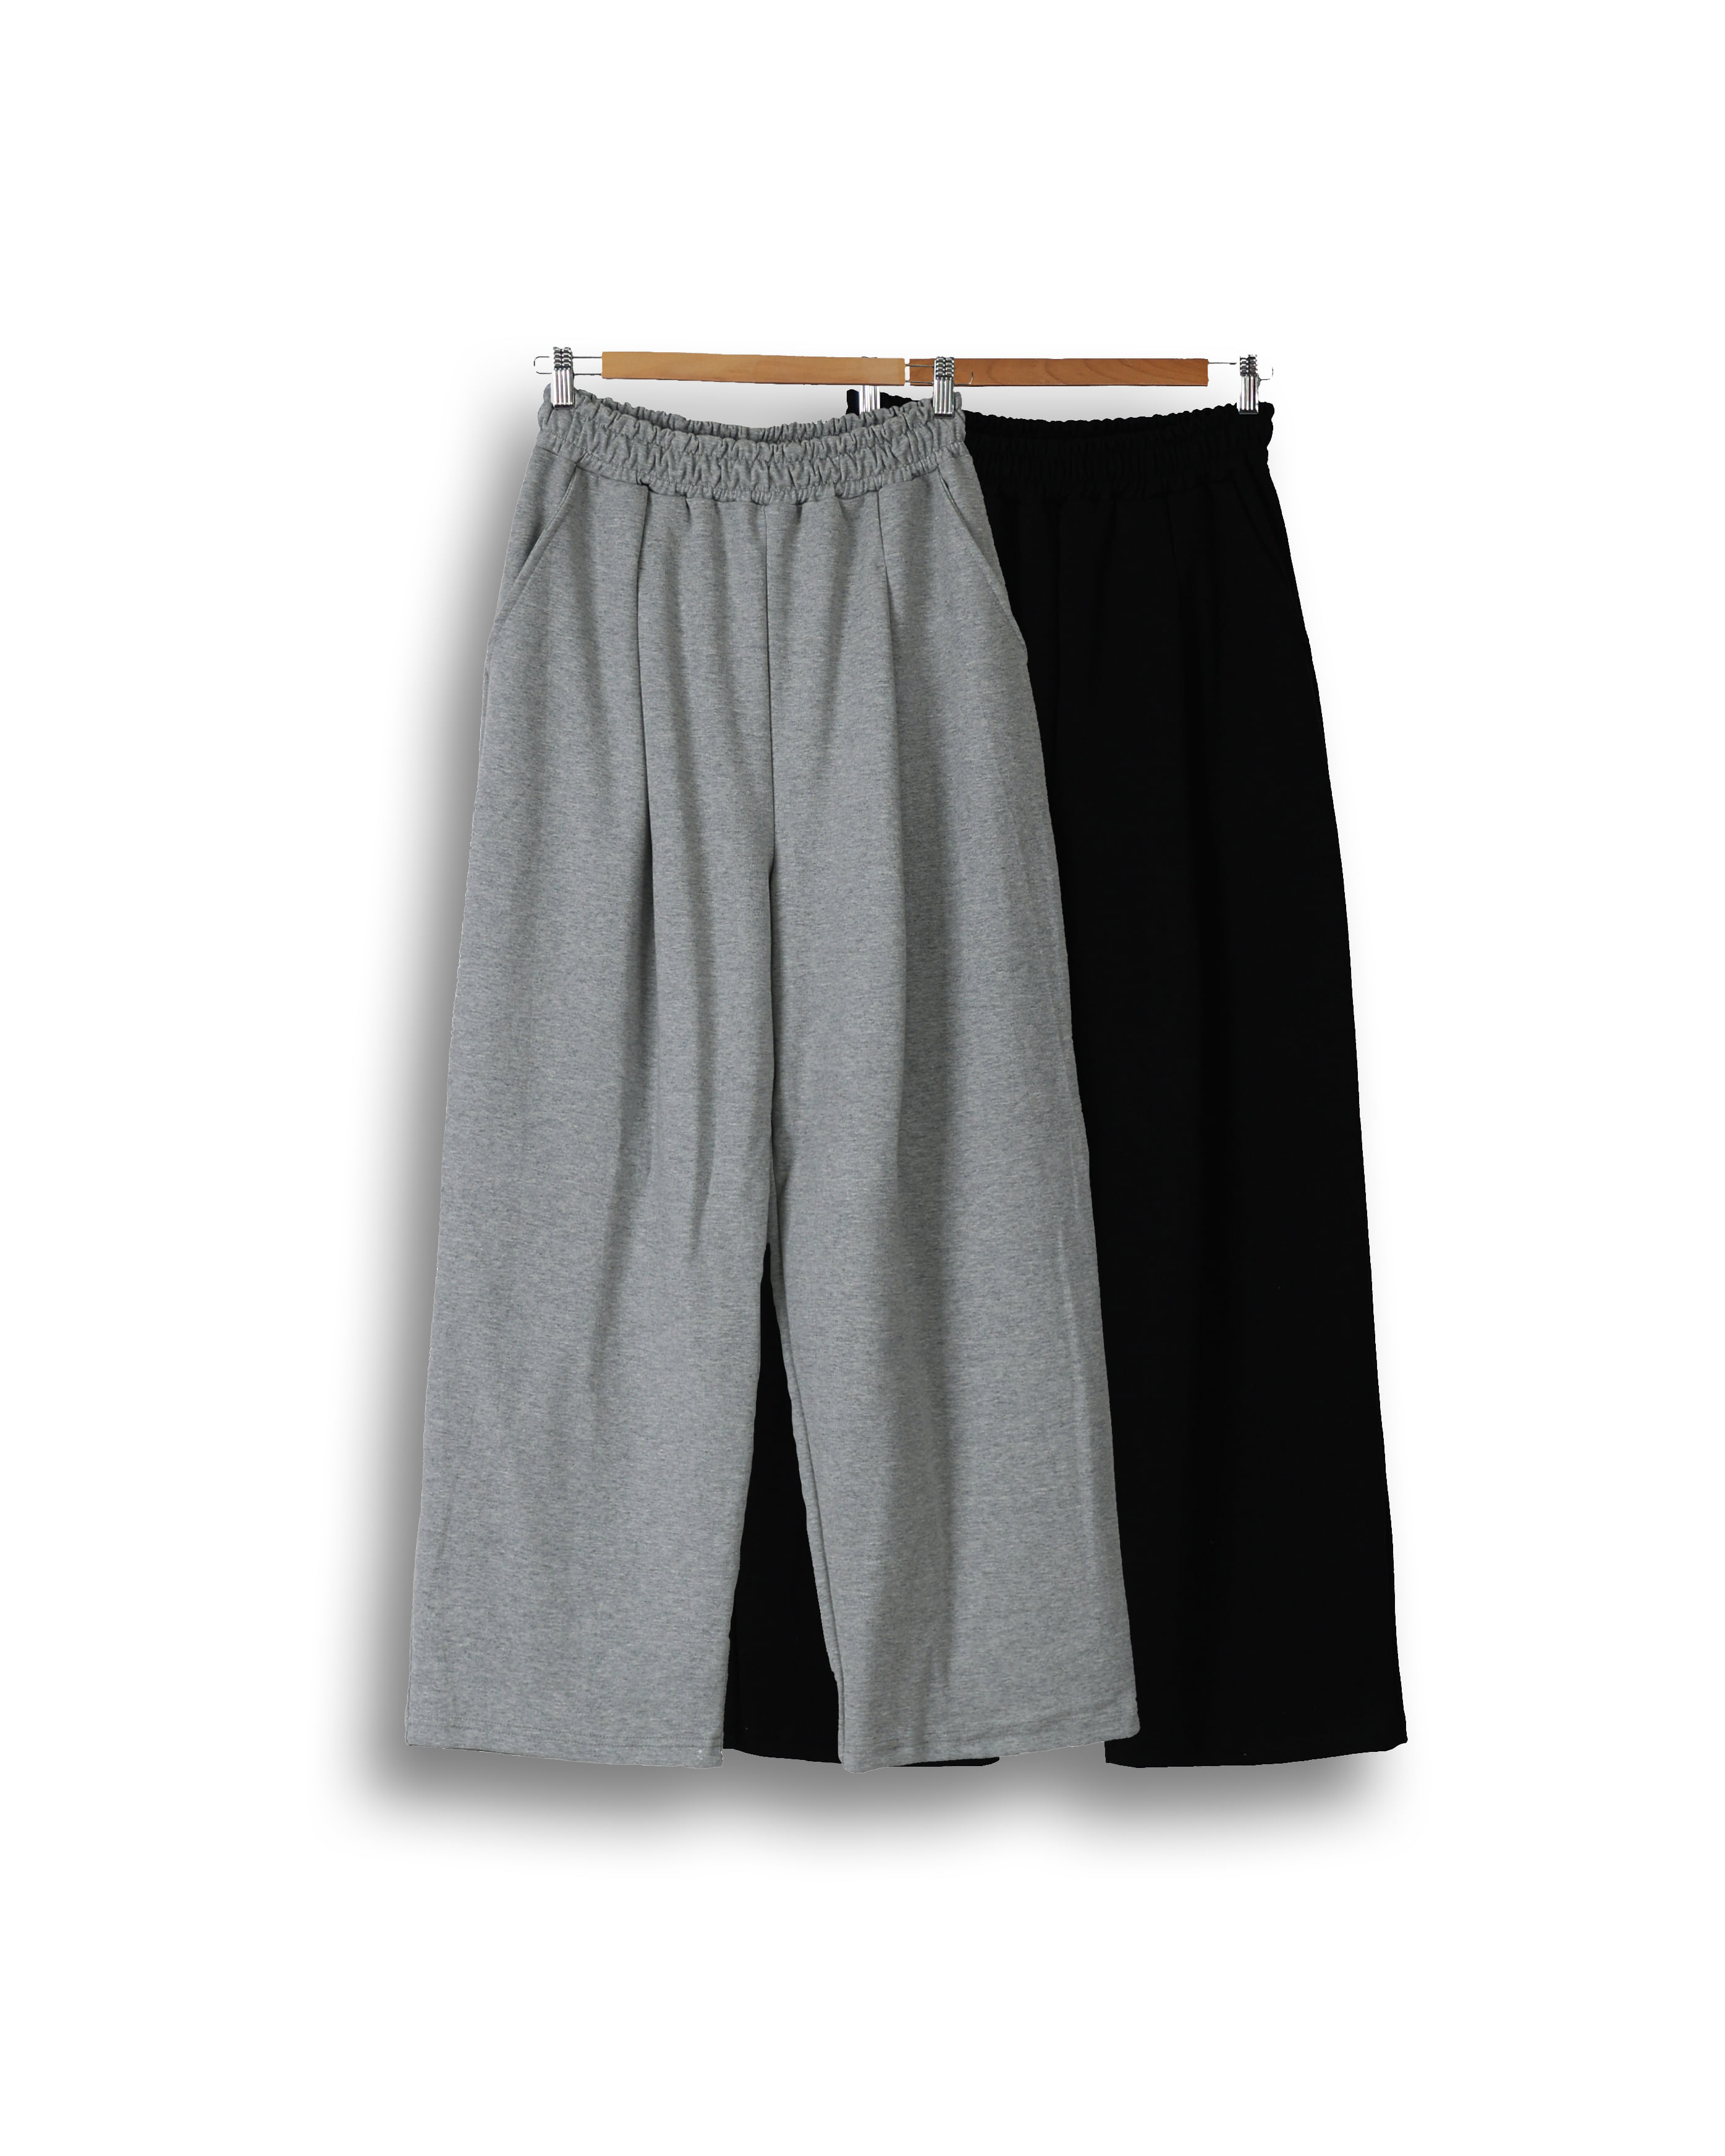 WORLD Combed Yarn Wide Sweat Pants (Black/Gray)